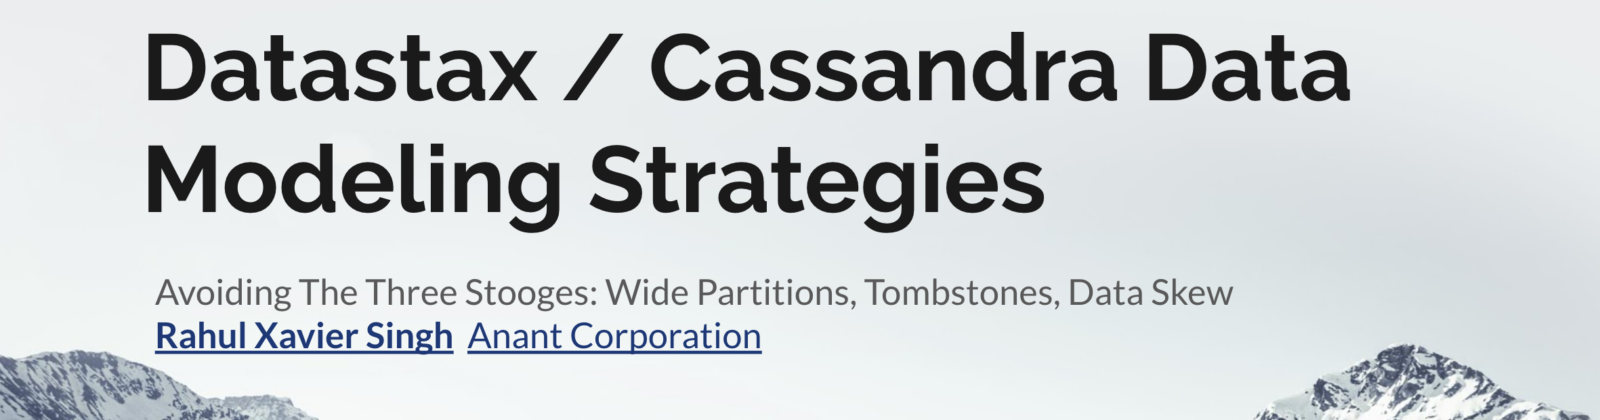 Datastax / Cassandra Data Modeling Strategies